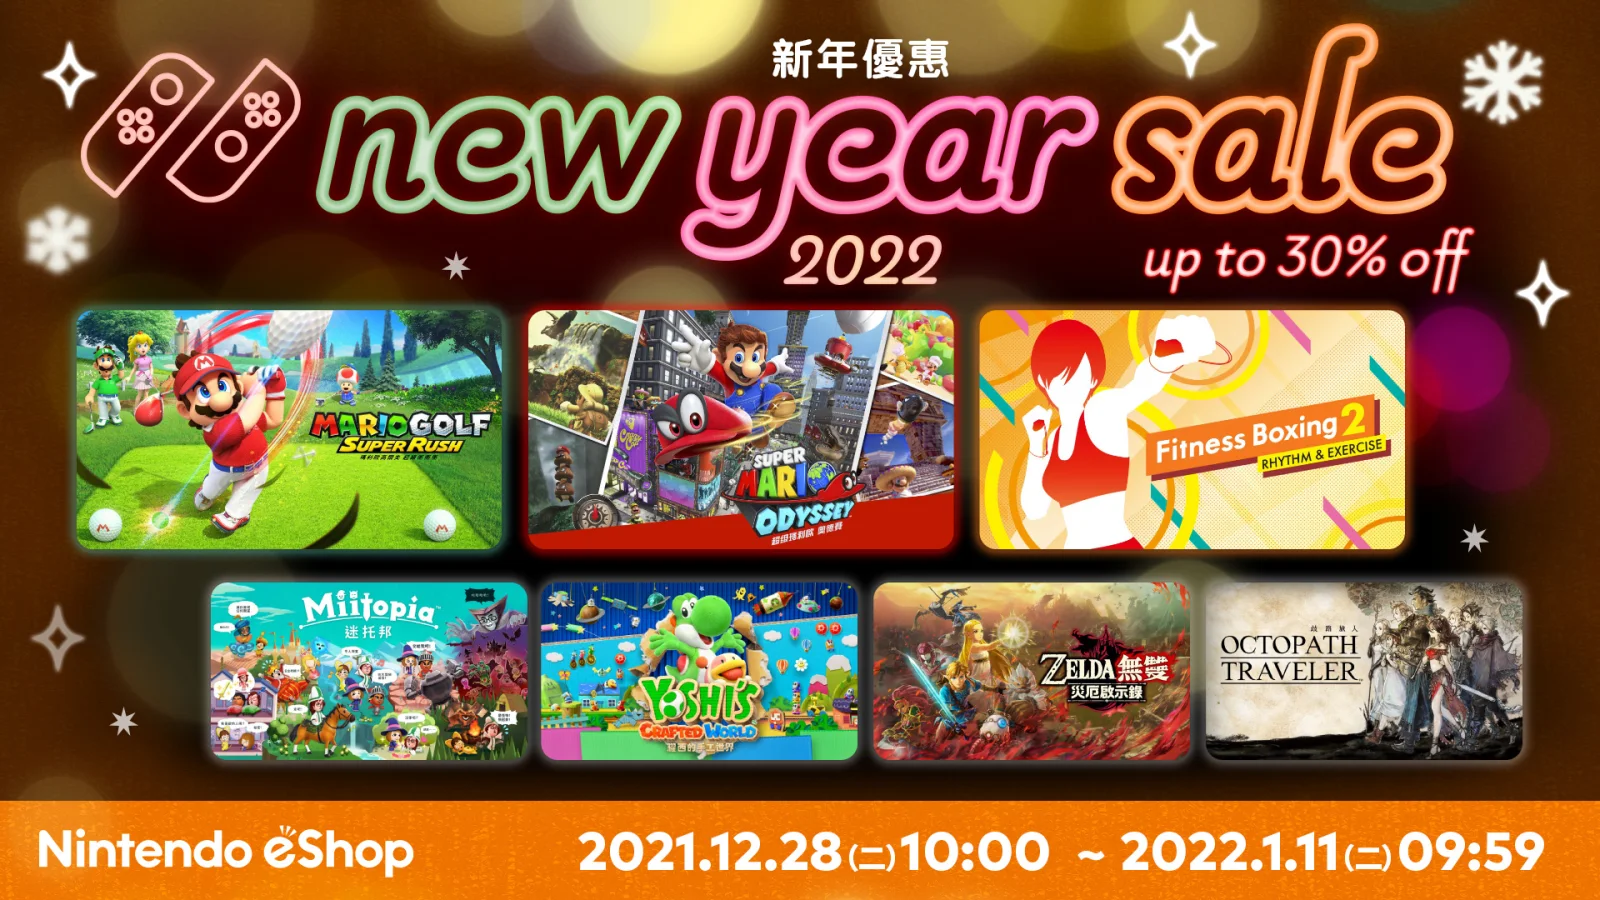 Nintendo eShop现已开始“新年优惠2022”大促，会员7日免费体验券再度发放